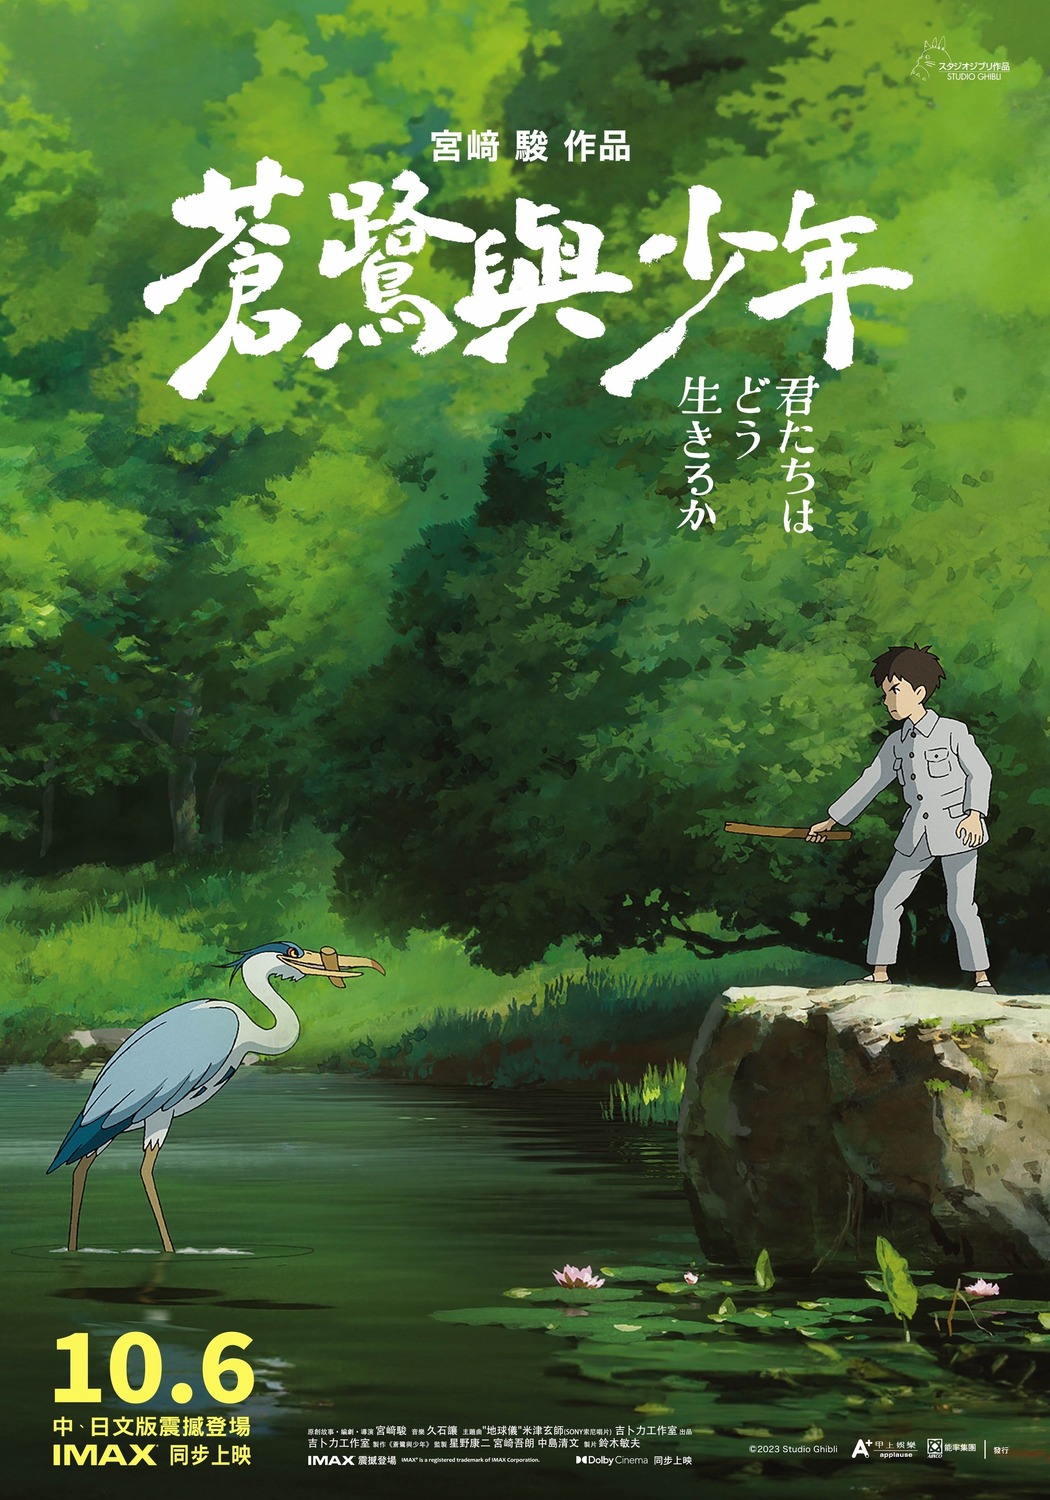 Extra Large Movie Poster Image for Kimitachi wa dô ikiru ka (#2 of 9)